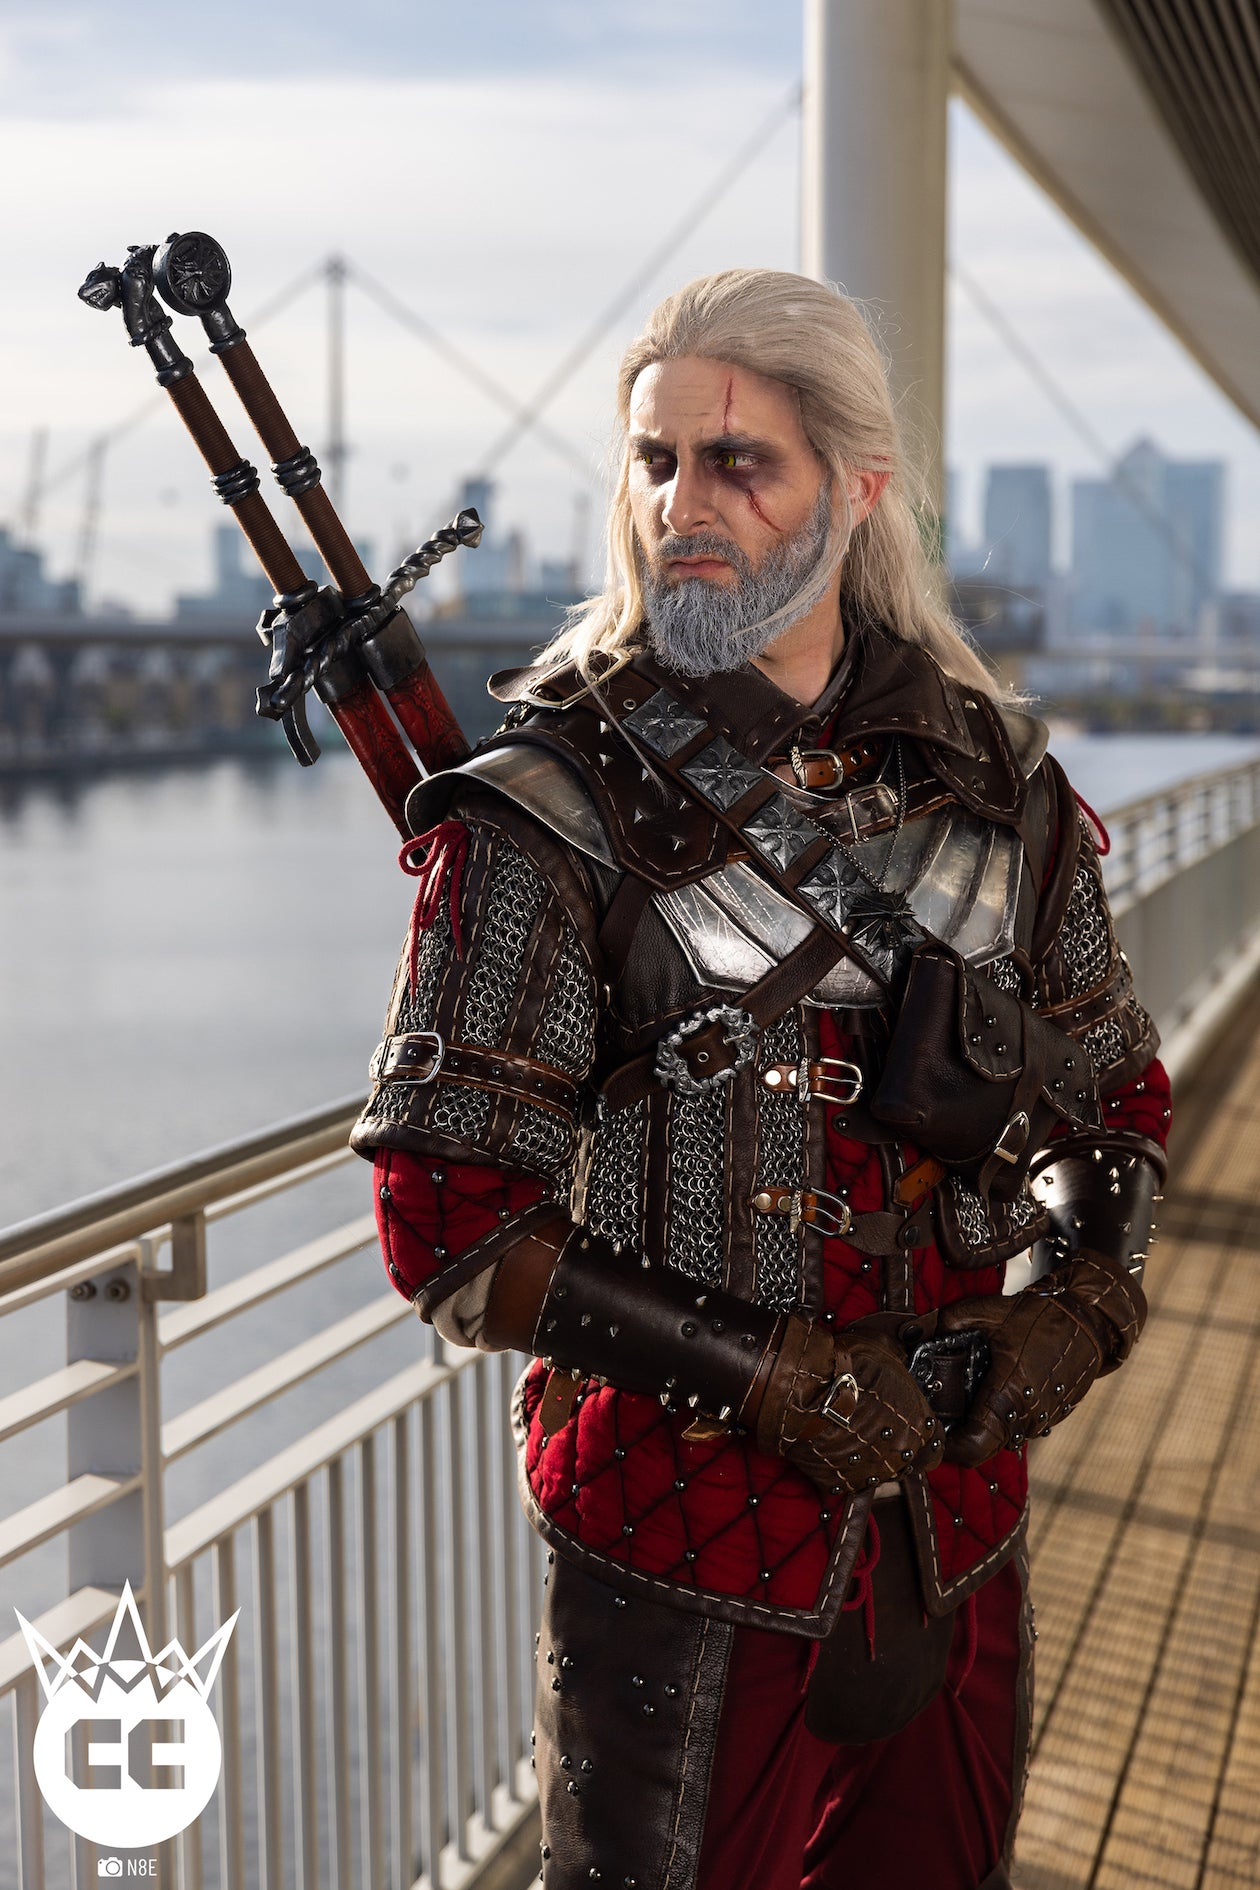 Opiekun as Geralt of Rivia from The Witcher 3: Wild Hunt